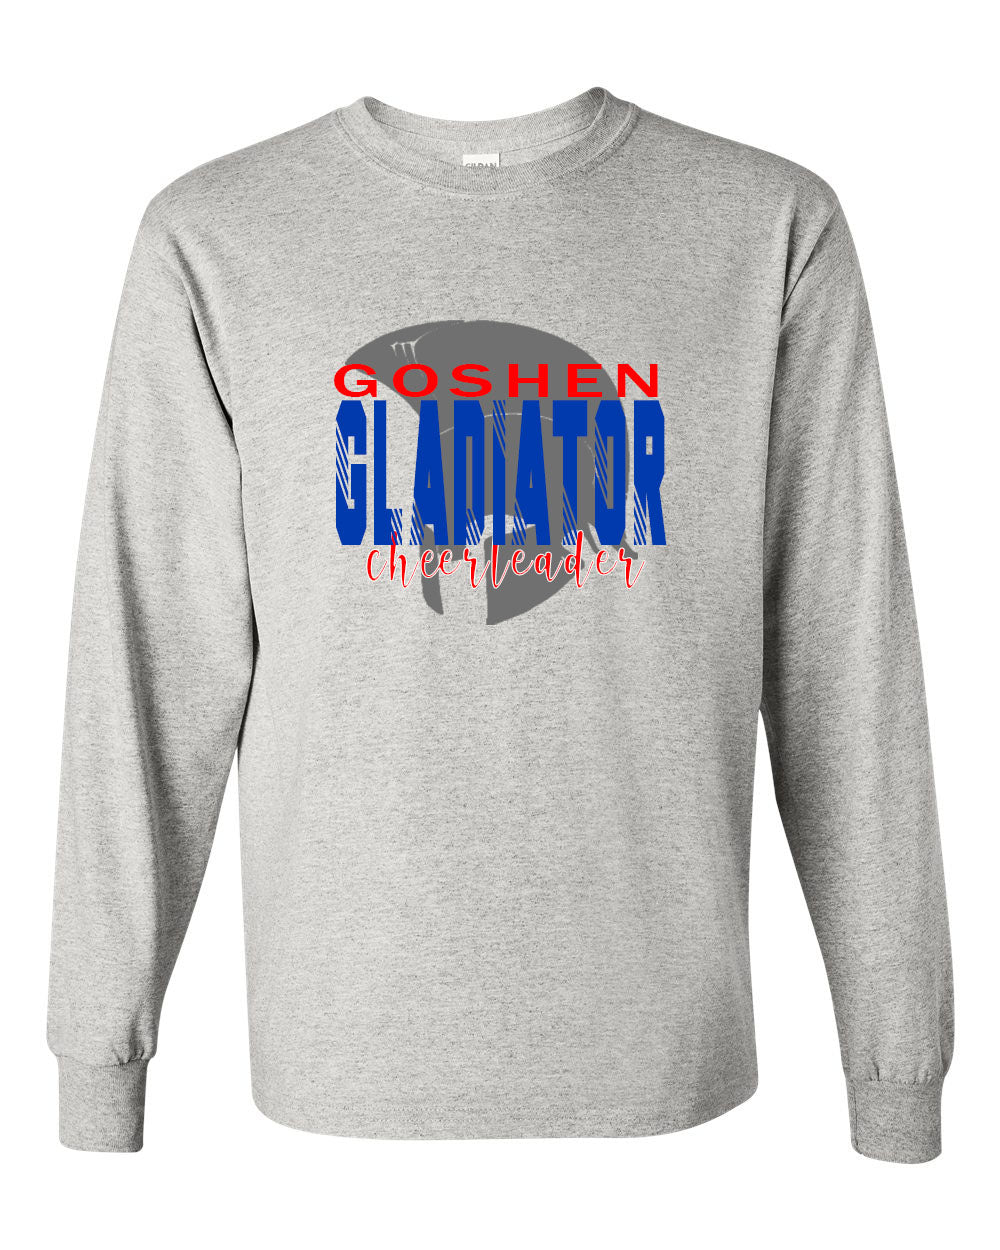 Goshen Gladiator Cheerleading Long Sleeve Shirt